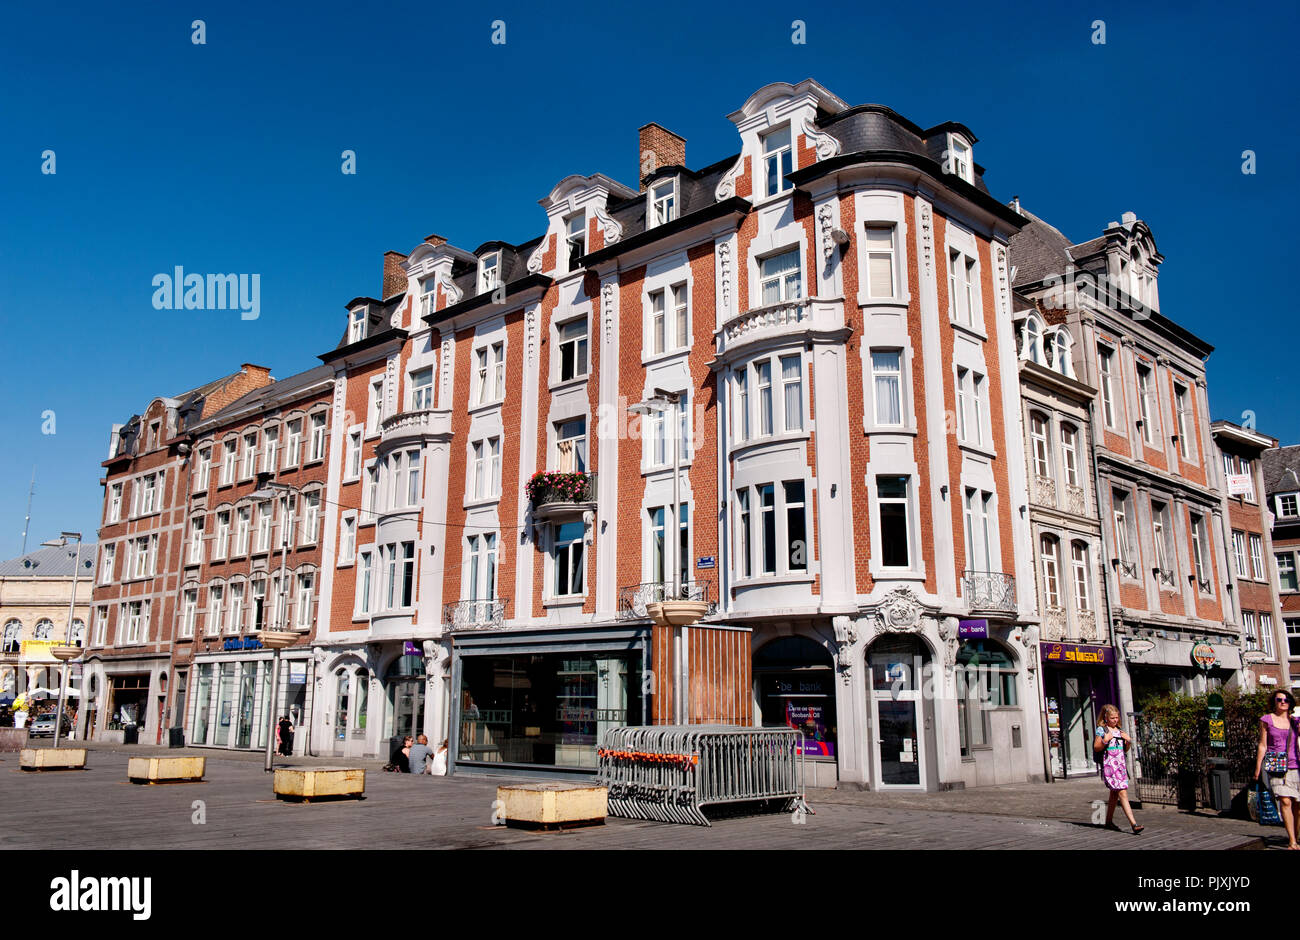 The Place d'Armes square in Namur (Belgium, 04/09/2013) Stock Photo